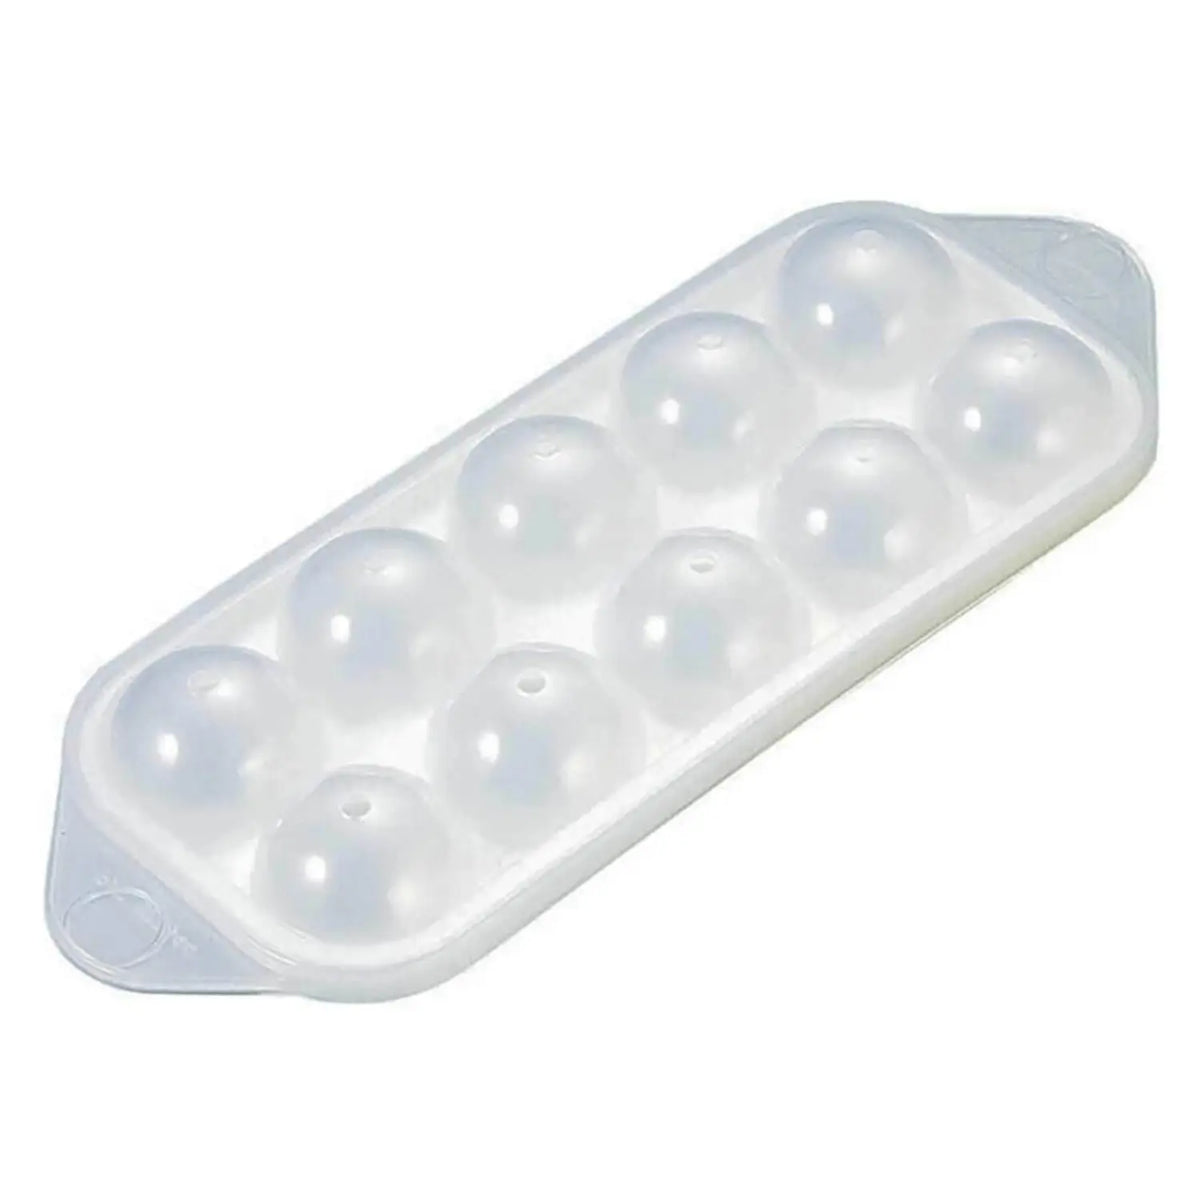 TIGERCROWN Polyethylene Ice Ball Tray